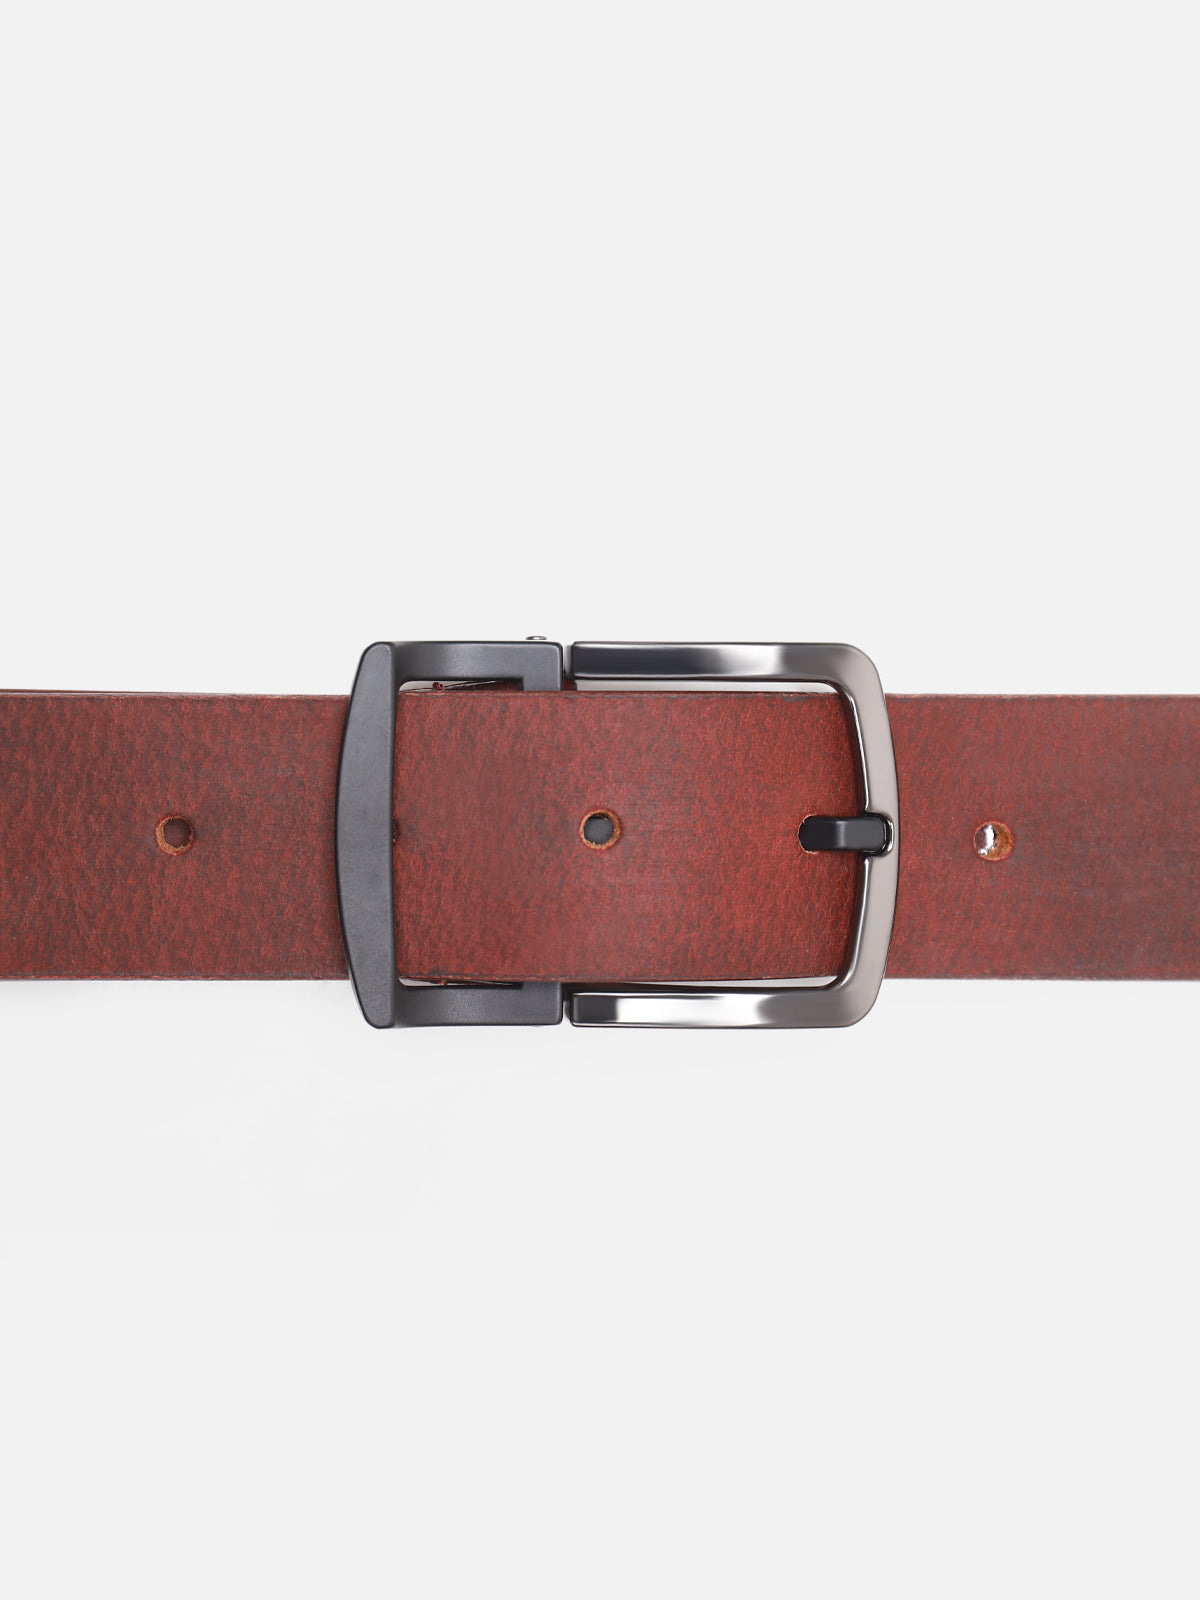 Maroon Leather Belt - FALB23-010